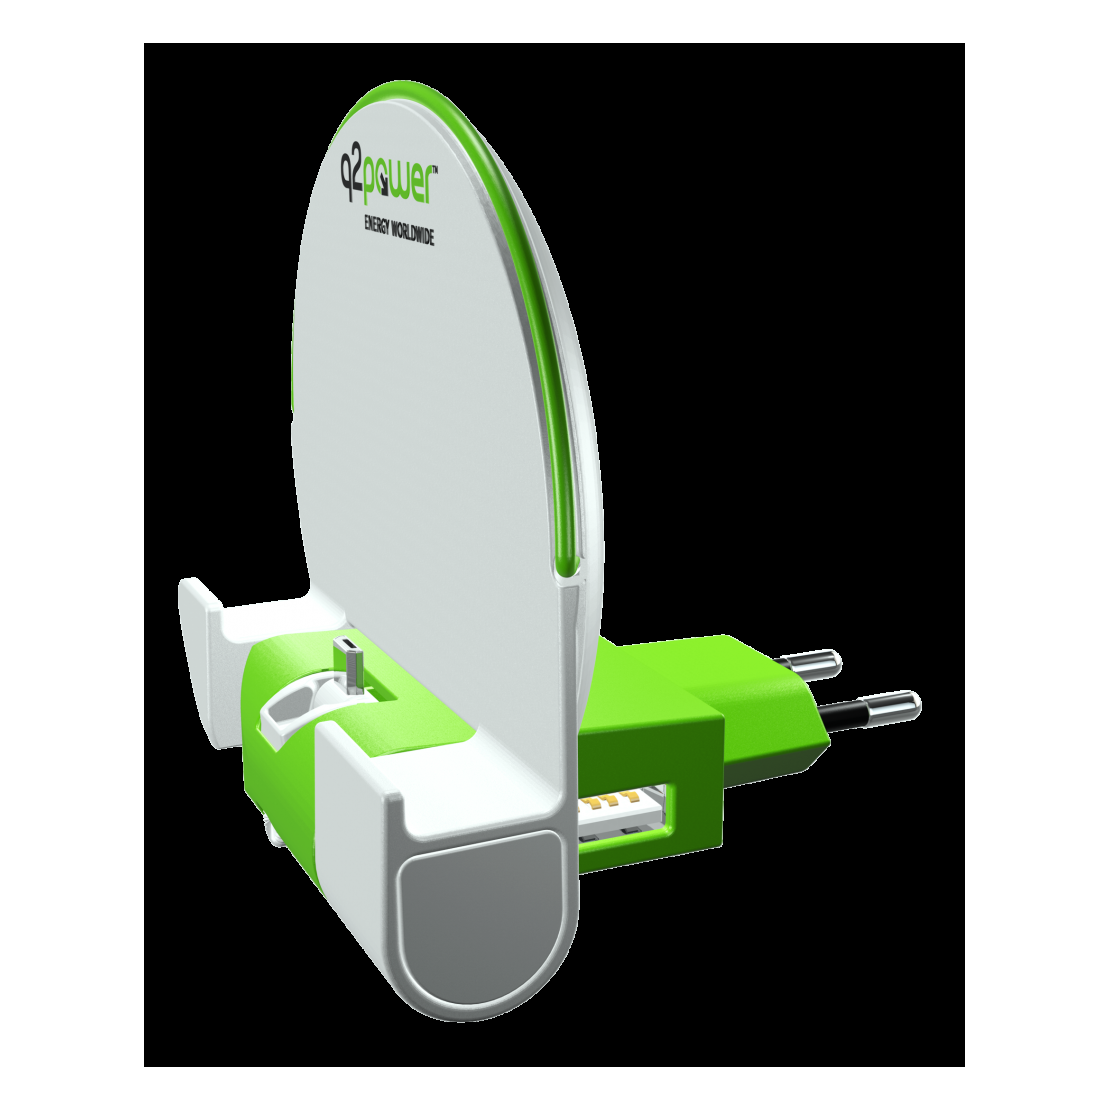 Dock & Charge Micro USB Europe (Apple) - Q2Power  